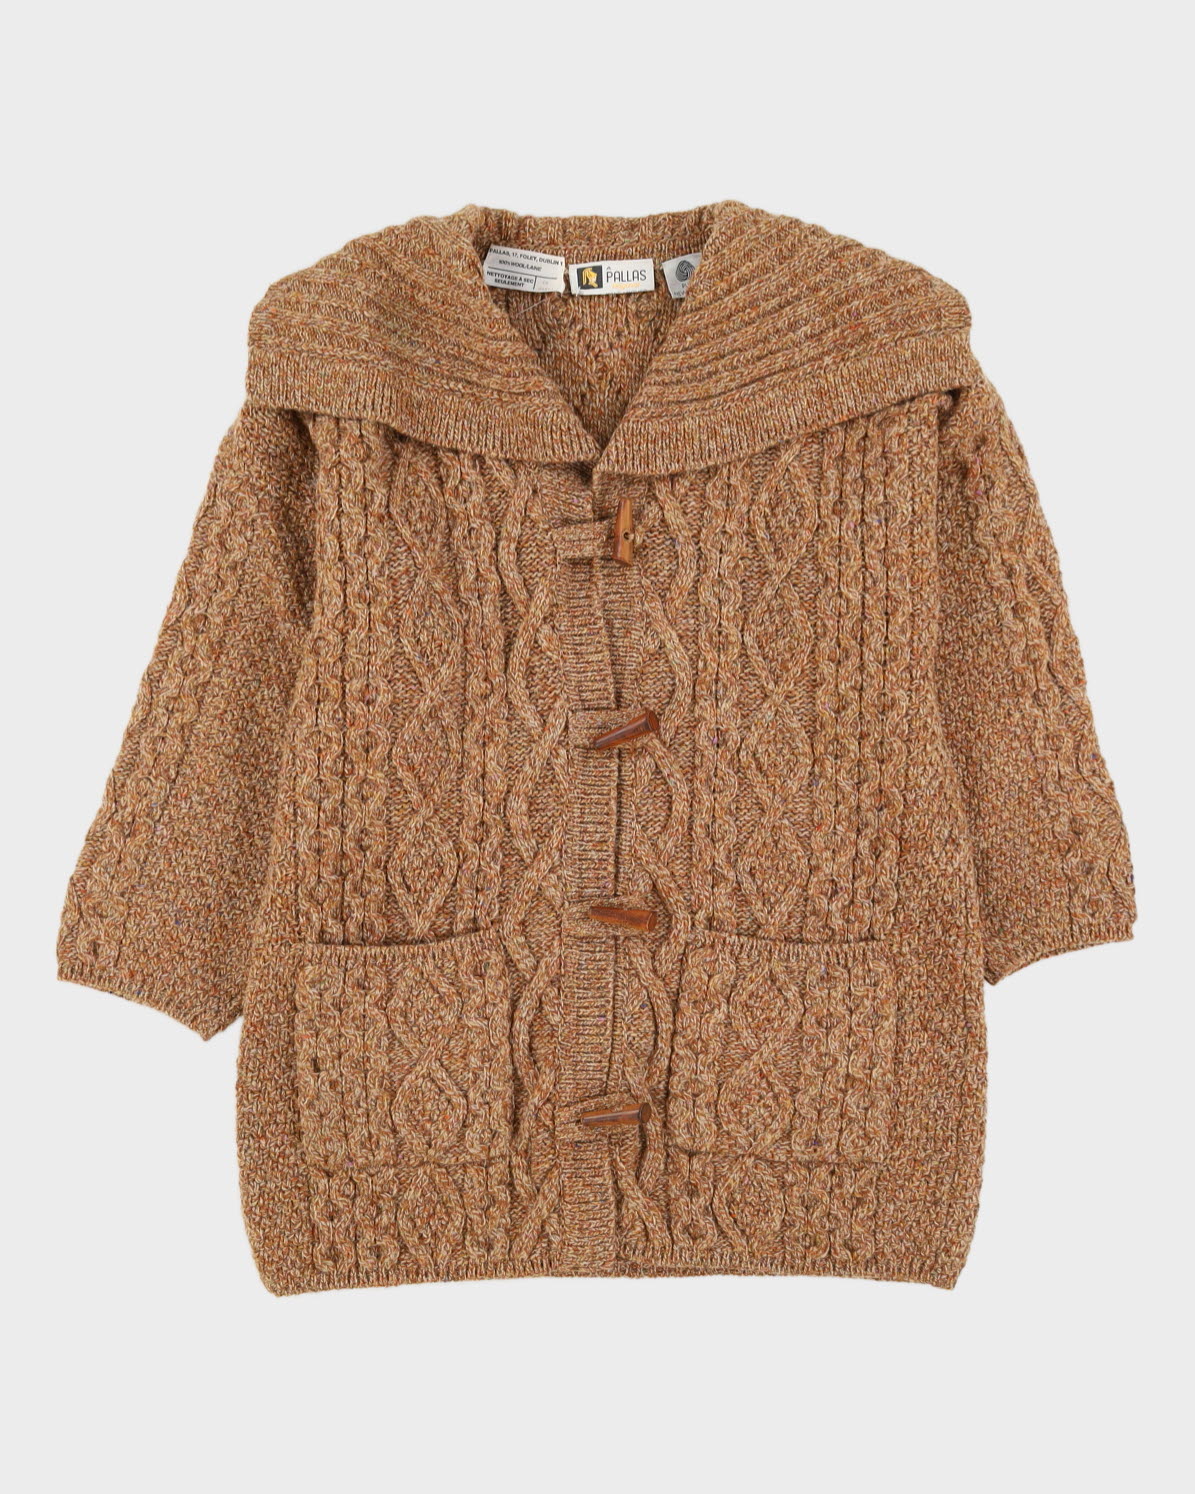 Irish Brown Wool Long Knitted Cardigan - L